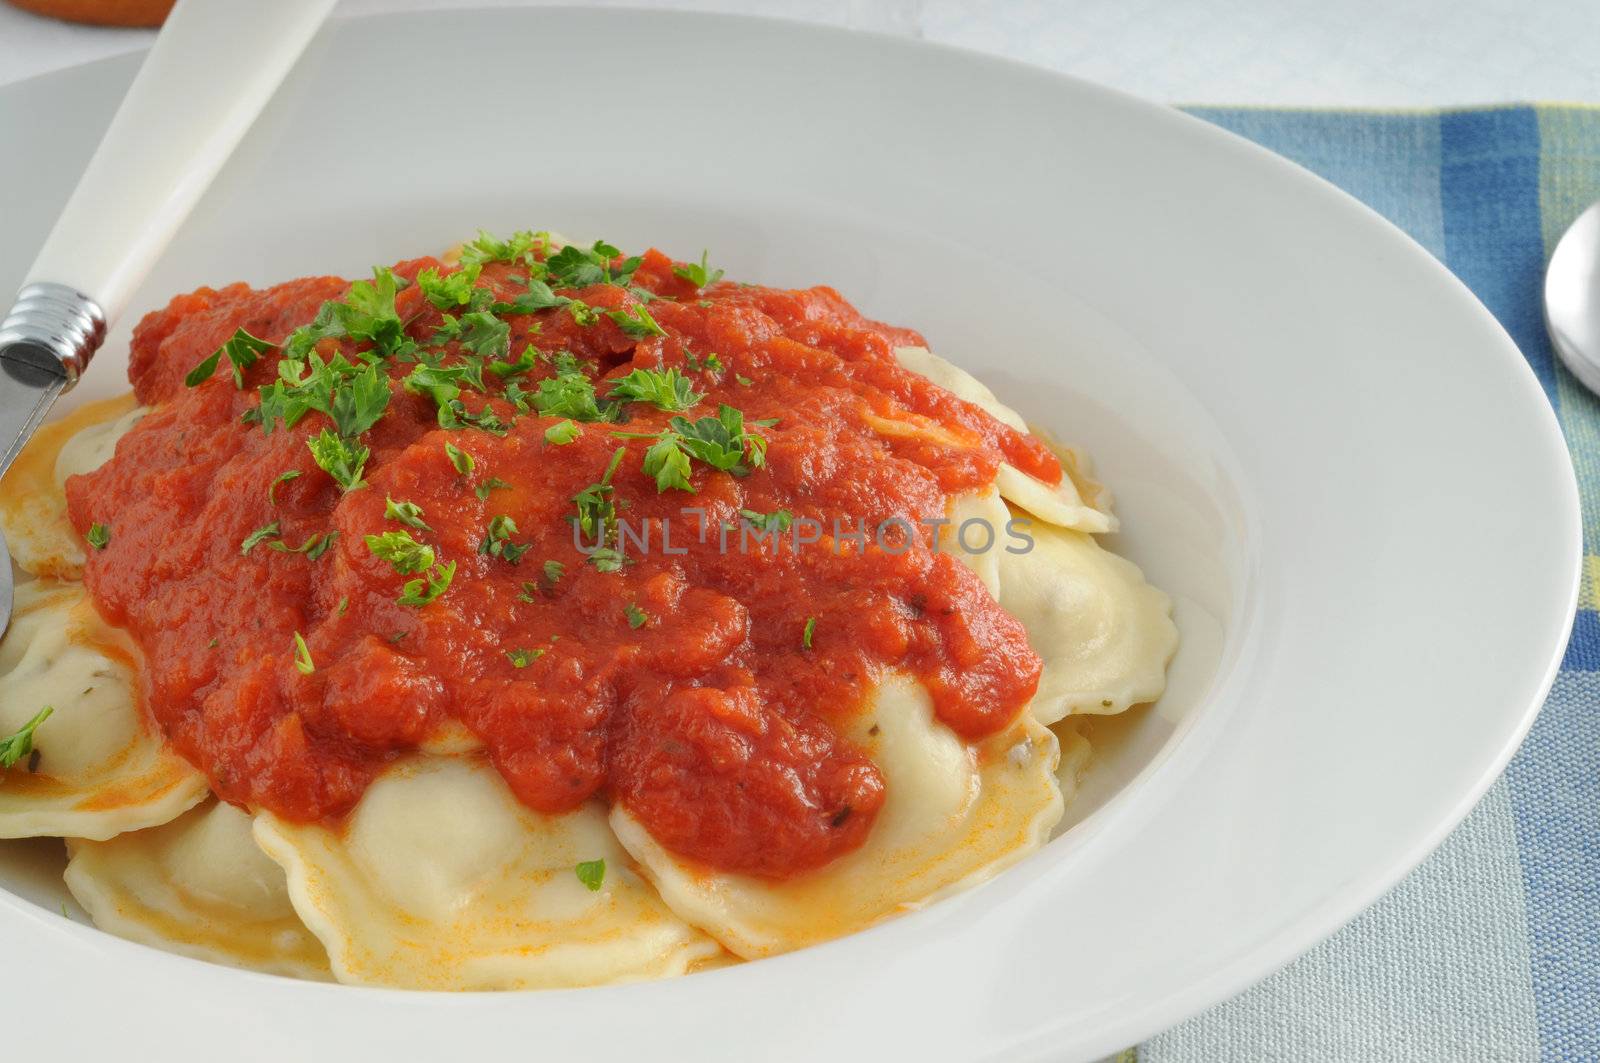 Delicious homemade ravioli pasta with marinara sauce'